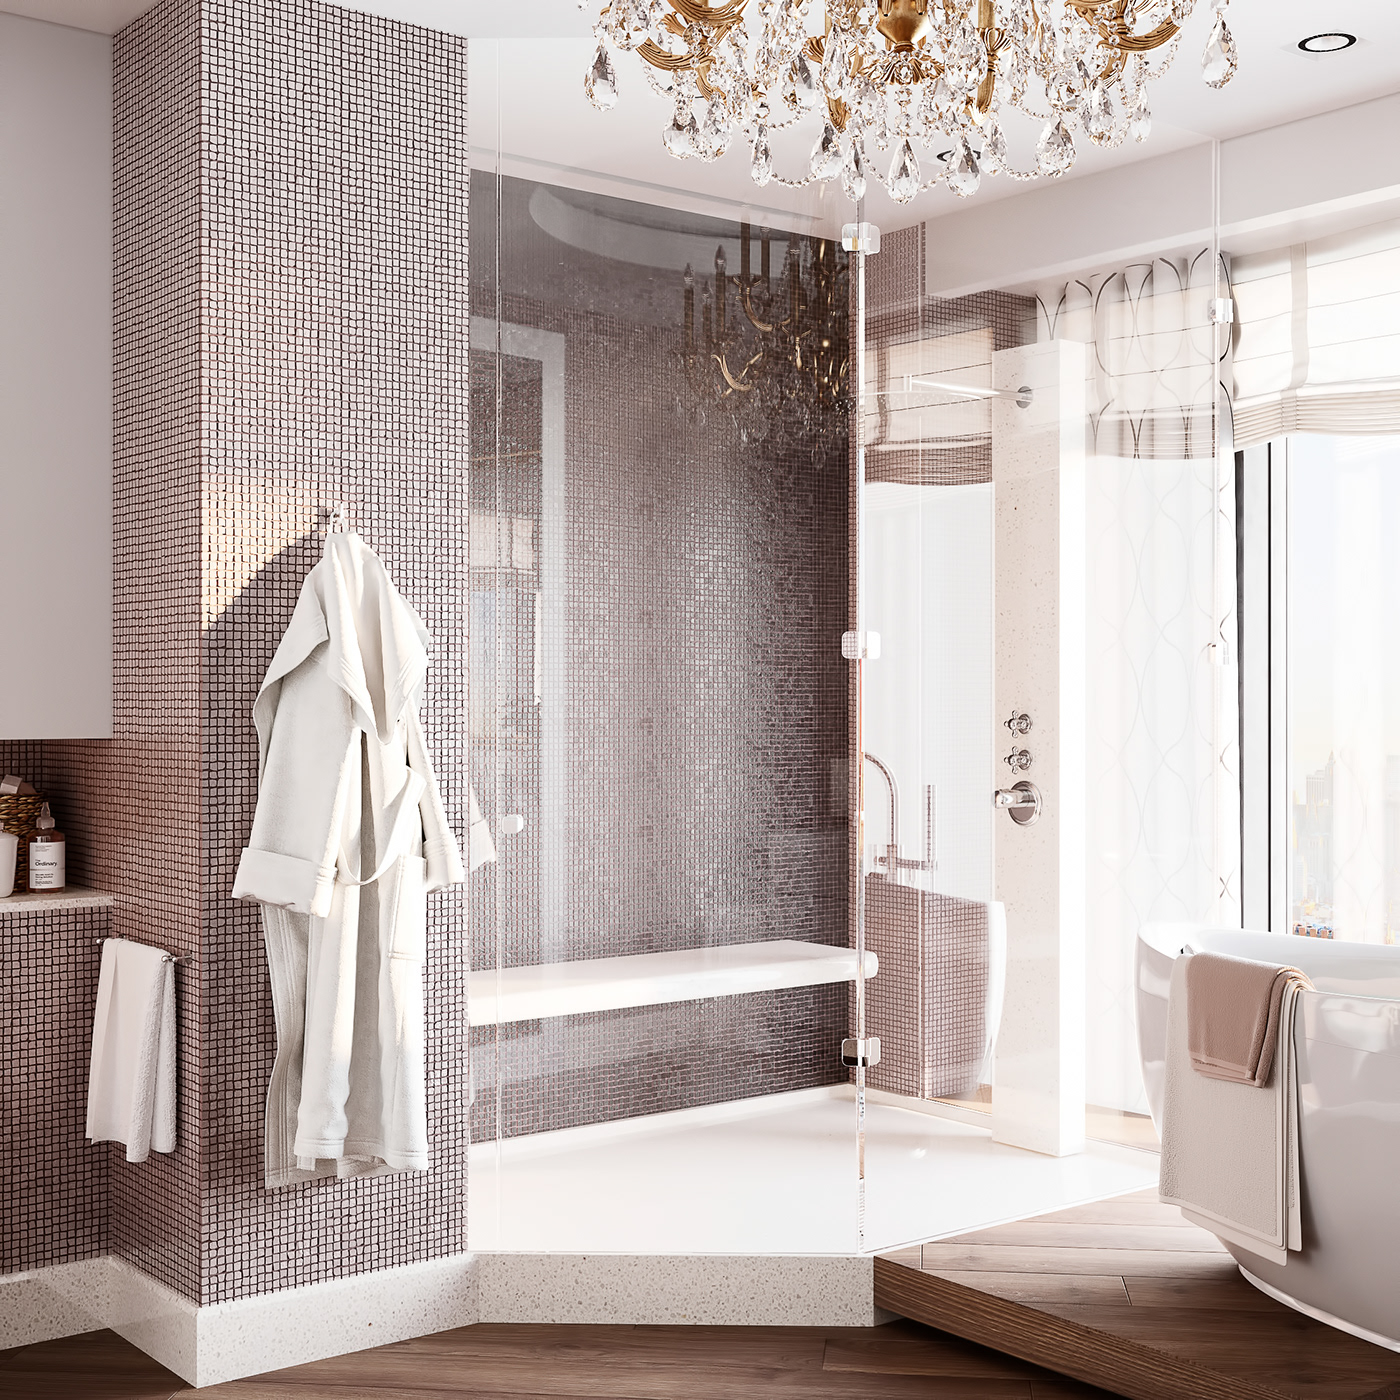 visualisation CG CGI interior design  design bedroom living room bathroom kitchen apartments